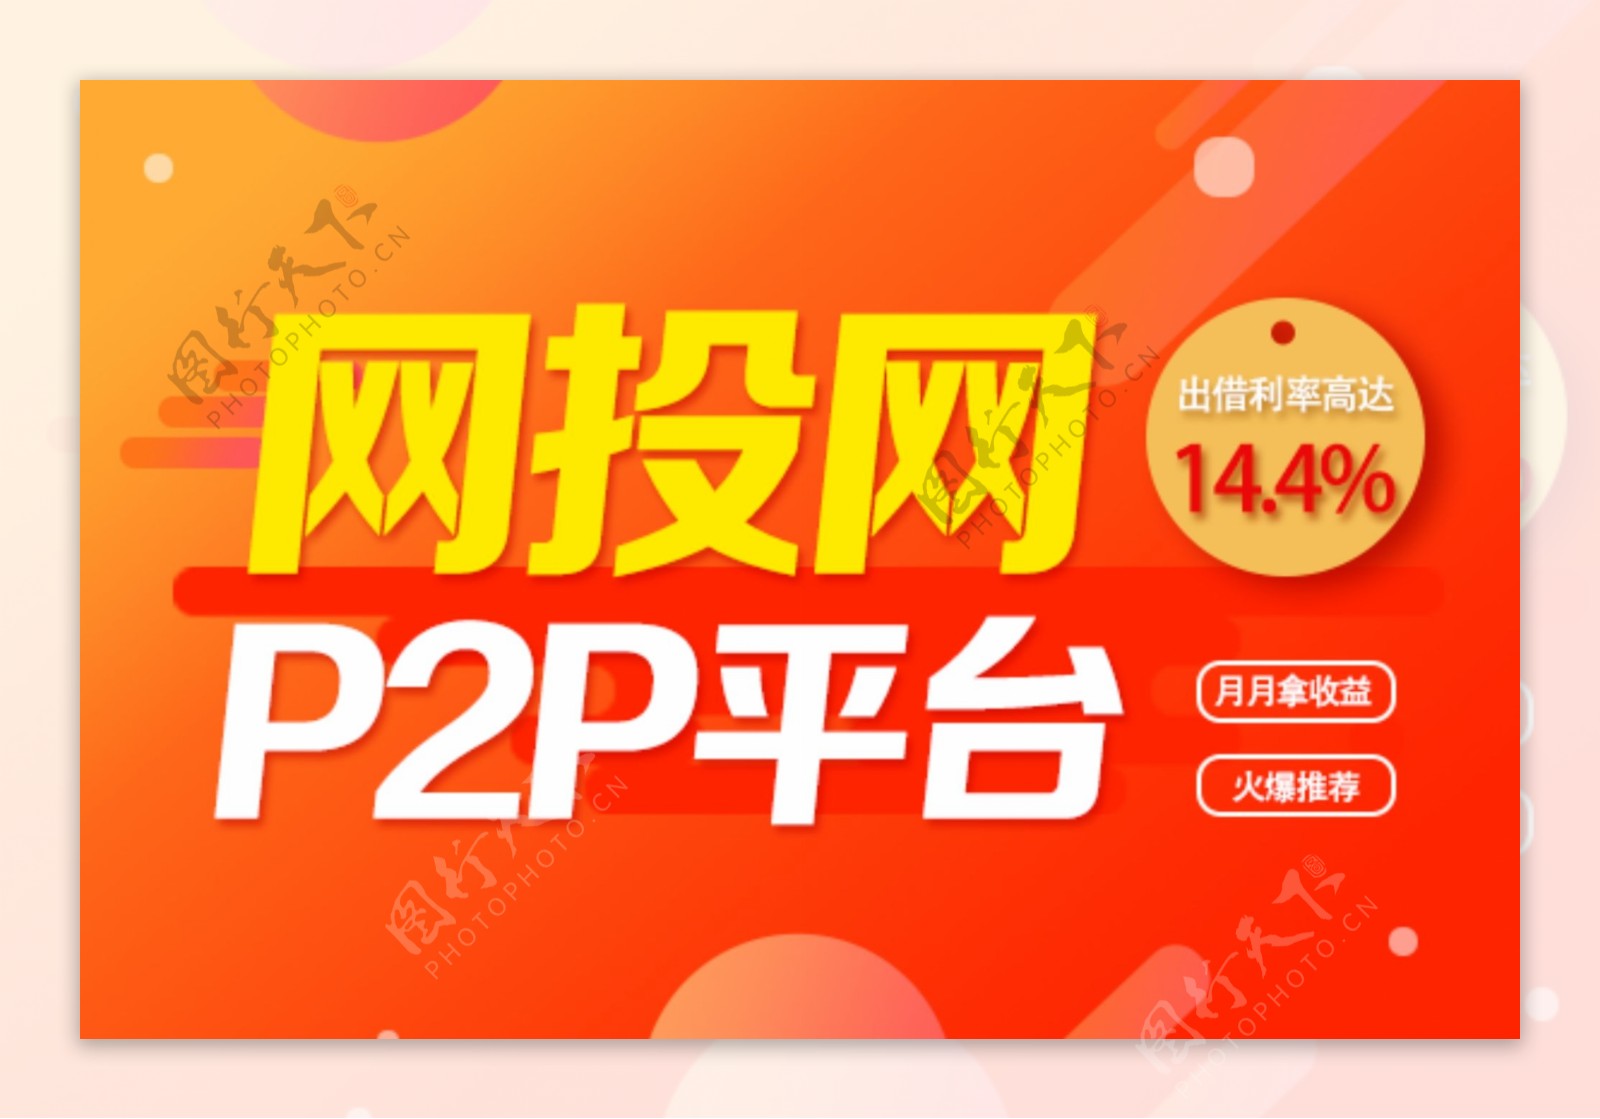 p2p网贷平台金融收益利率banner